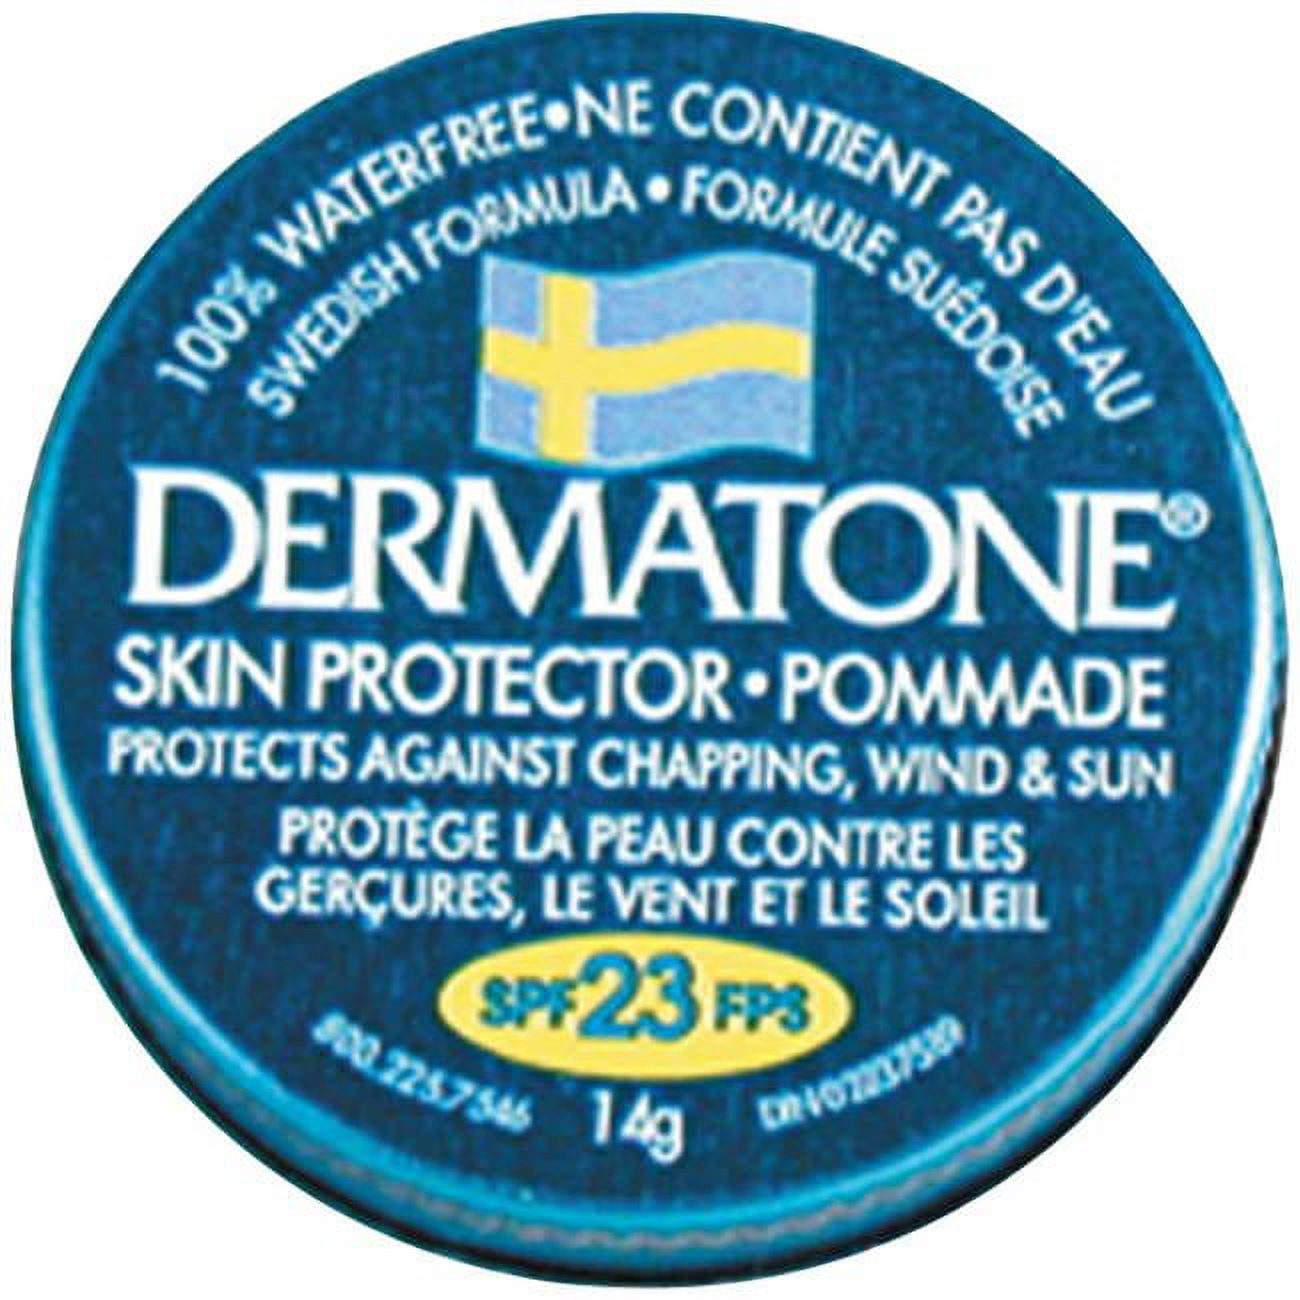 Dermatone SPF 23 Sun Protectant 0.5oz Tin Water Resistant UVA UVB Protection - image 1 of 3